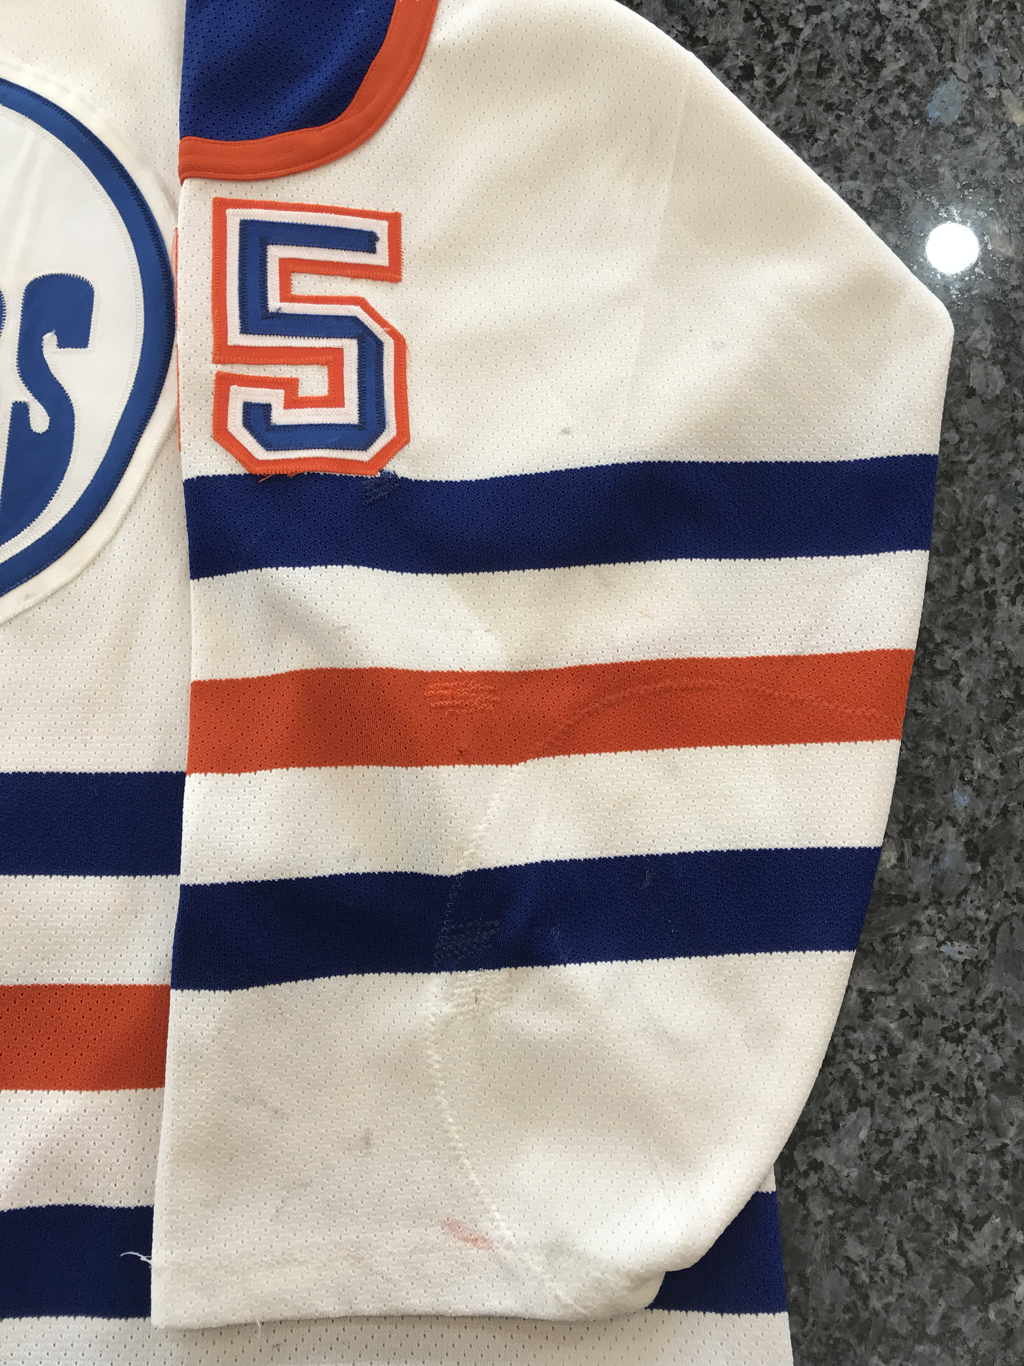 1997-98 Georges Laraque Game Worn Edmonton Oilers Jersey